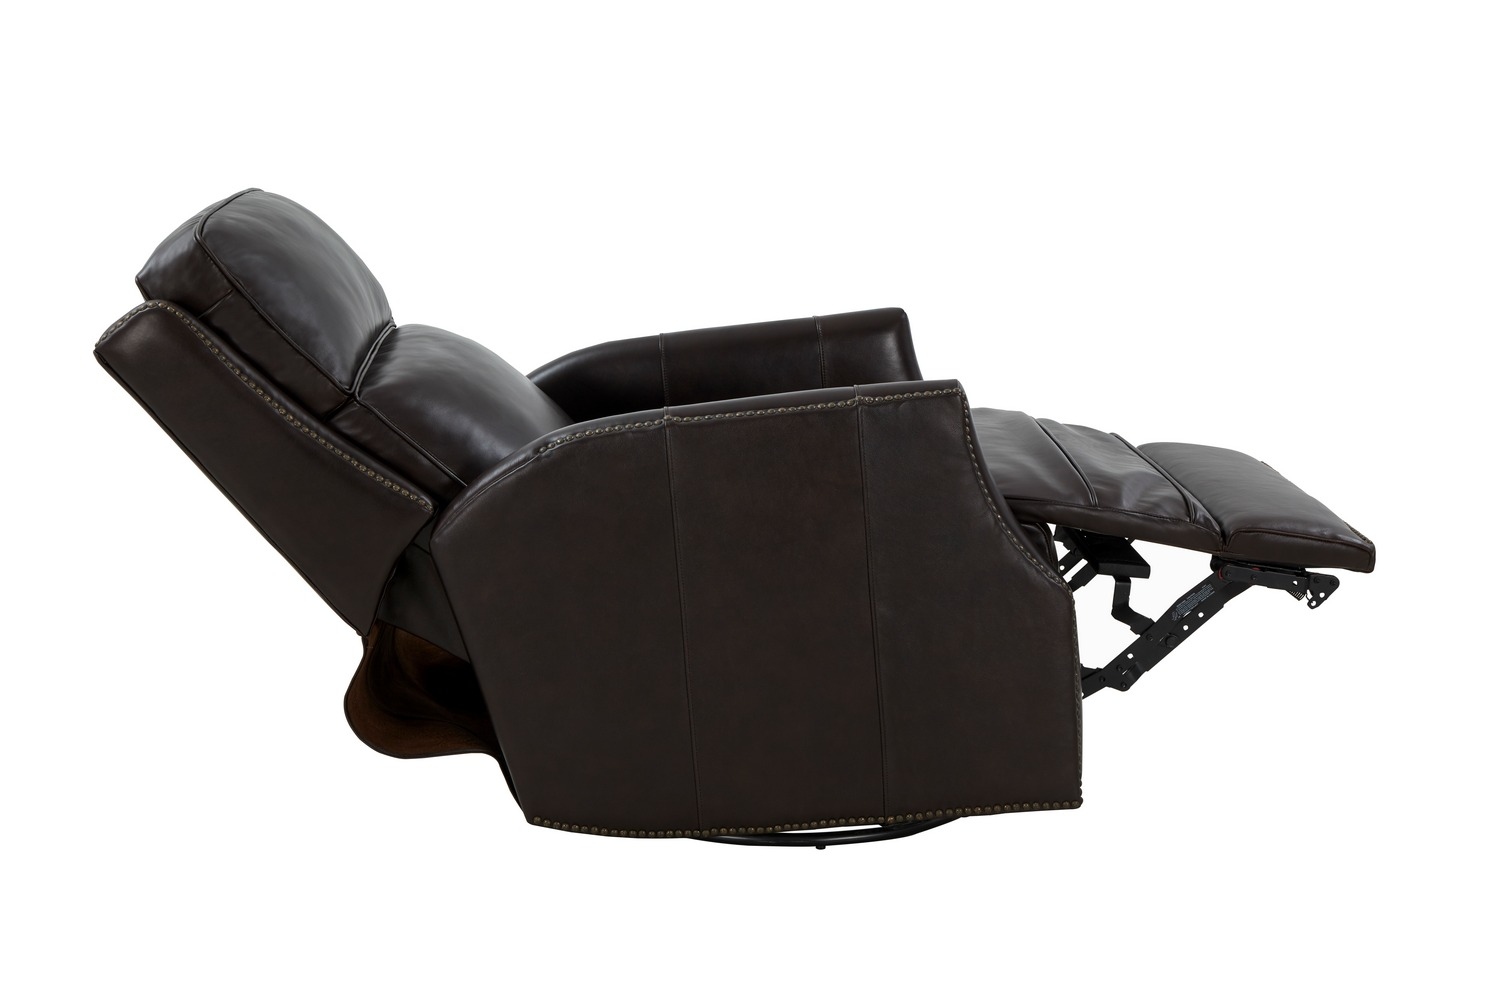 Barcalounger Aniston Power Swivel Glider Recliner Chair with Power Head Rest - Bennington Fudge/All Leather